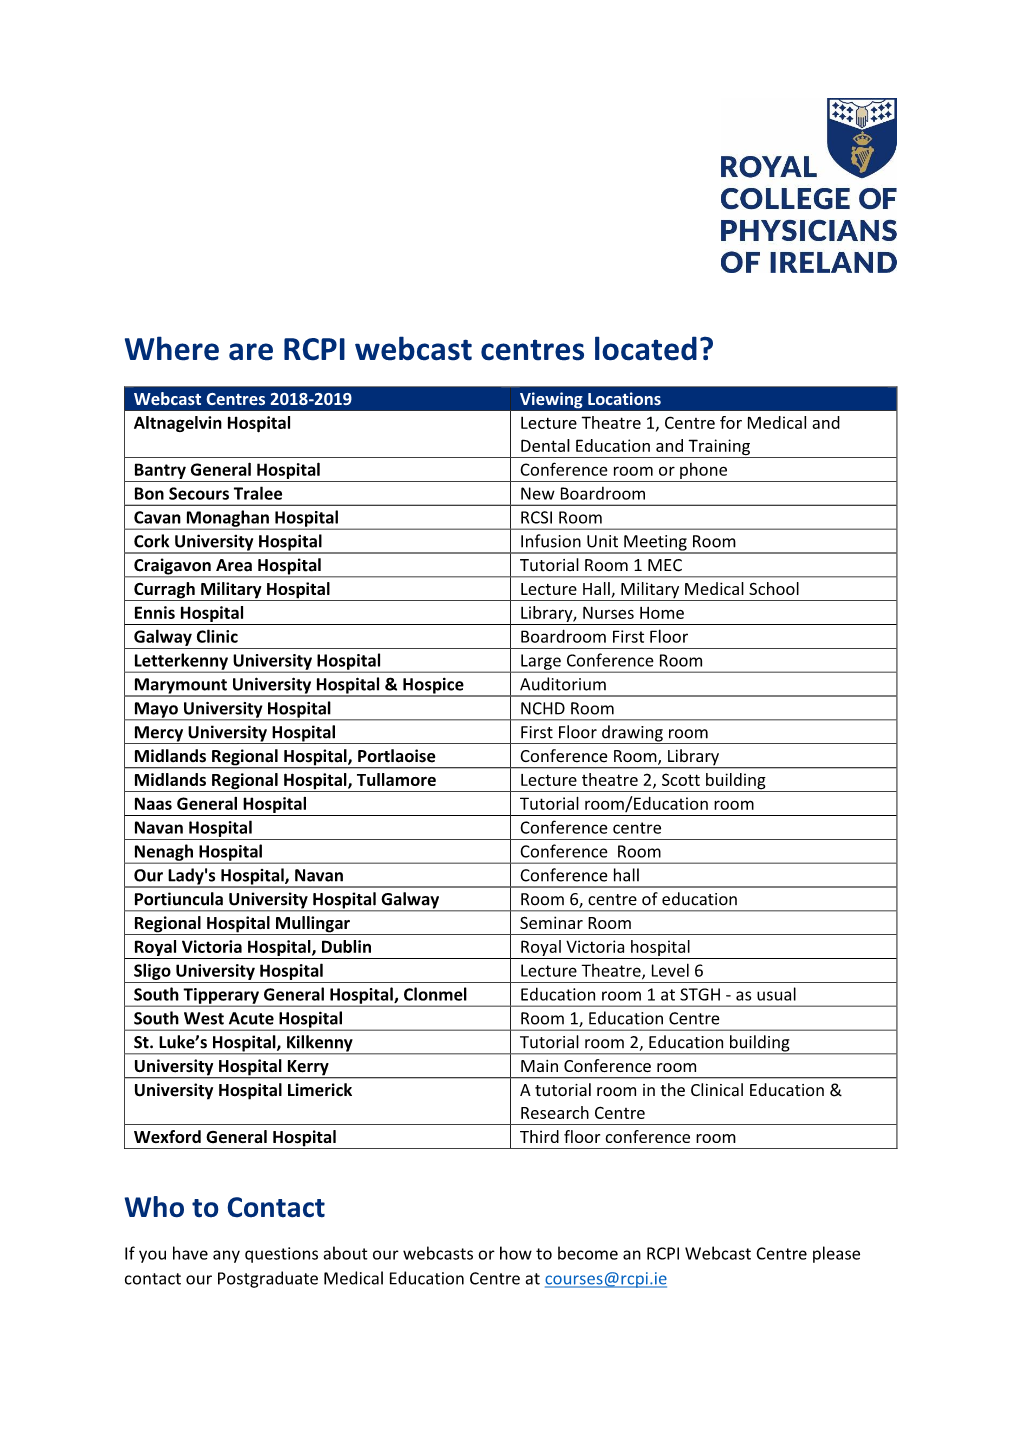 Where Are RCPI Webcast Centres Located?